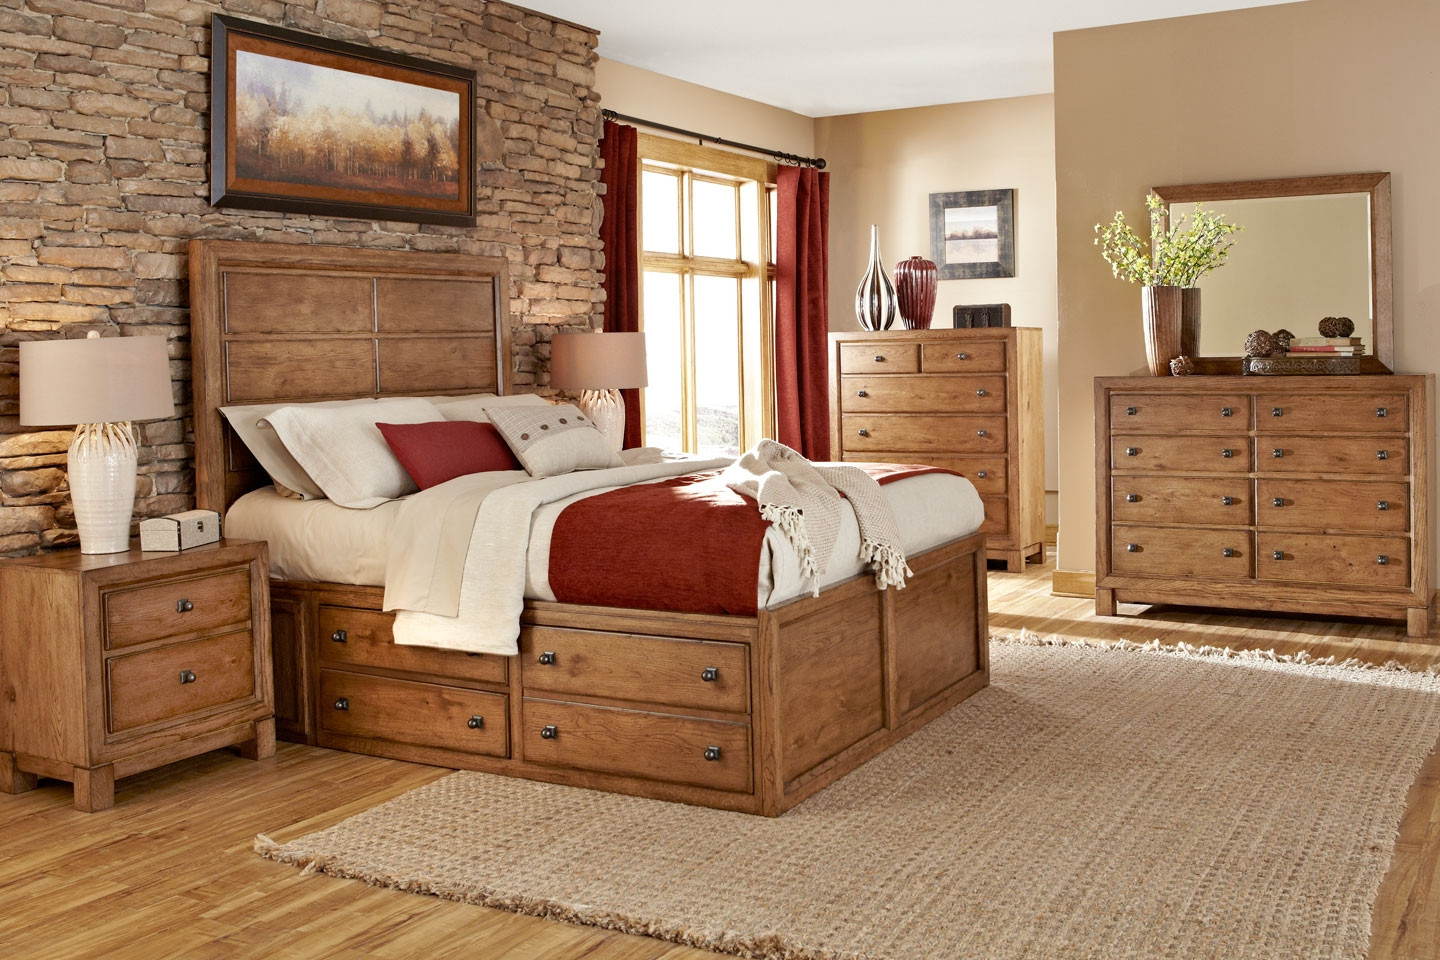 Rustic Wood Bedroom Sets
 Bedroom Remarkable Rustic Bedroom Sets Design For Bedroom